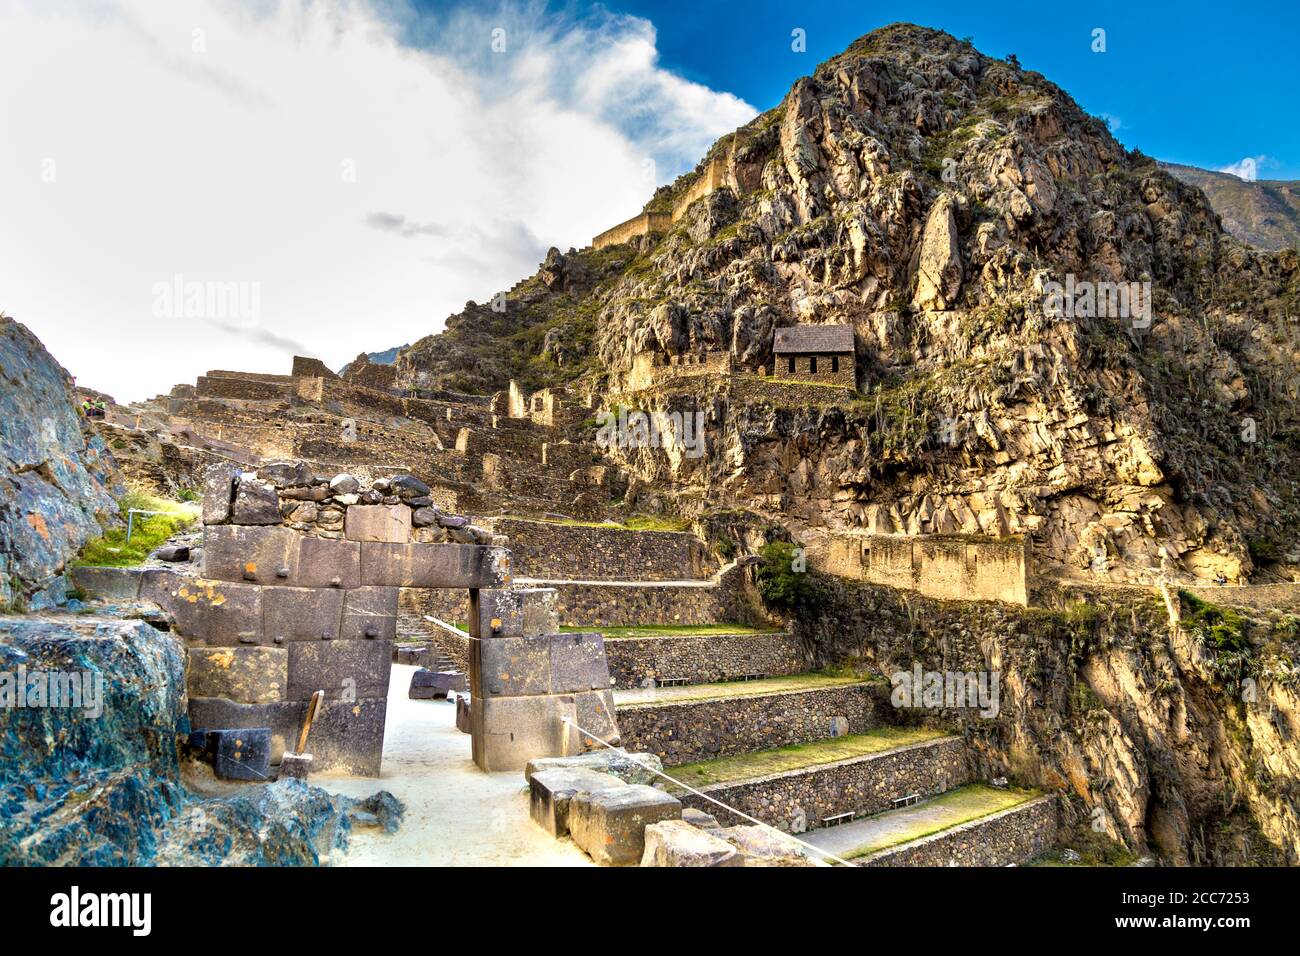 Gate and terraces at ruins of ancient Inca royal estate of Emperor Pachacuti, Ollantaytambo, Sacred Valley, Peru Stock Photo